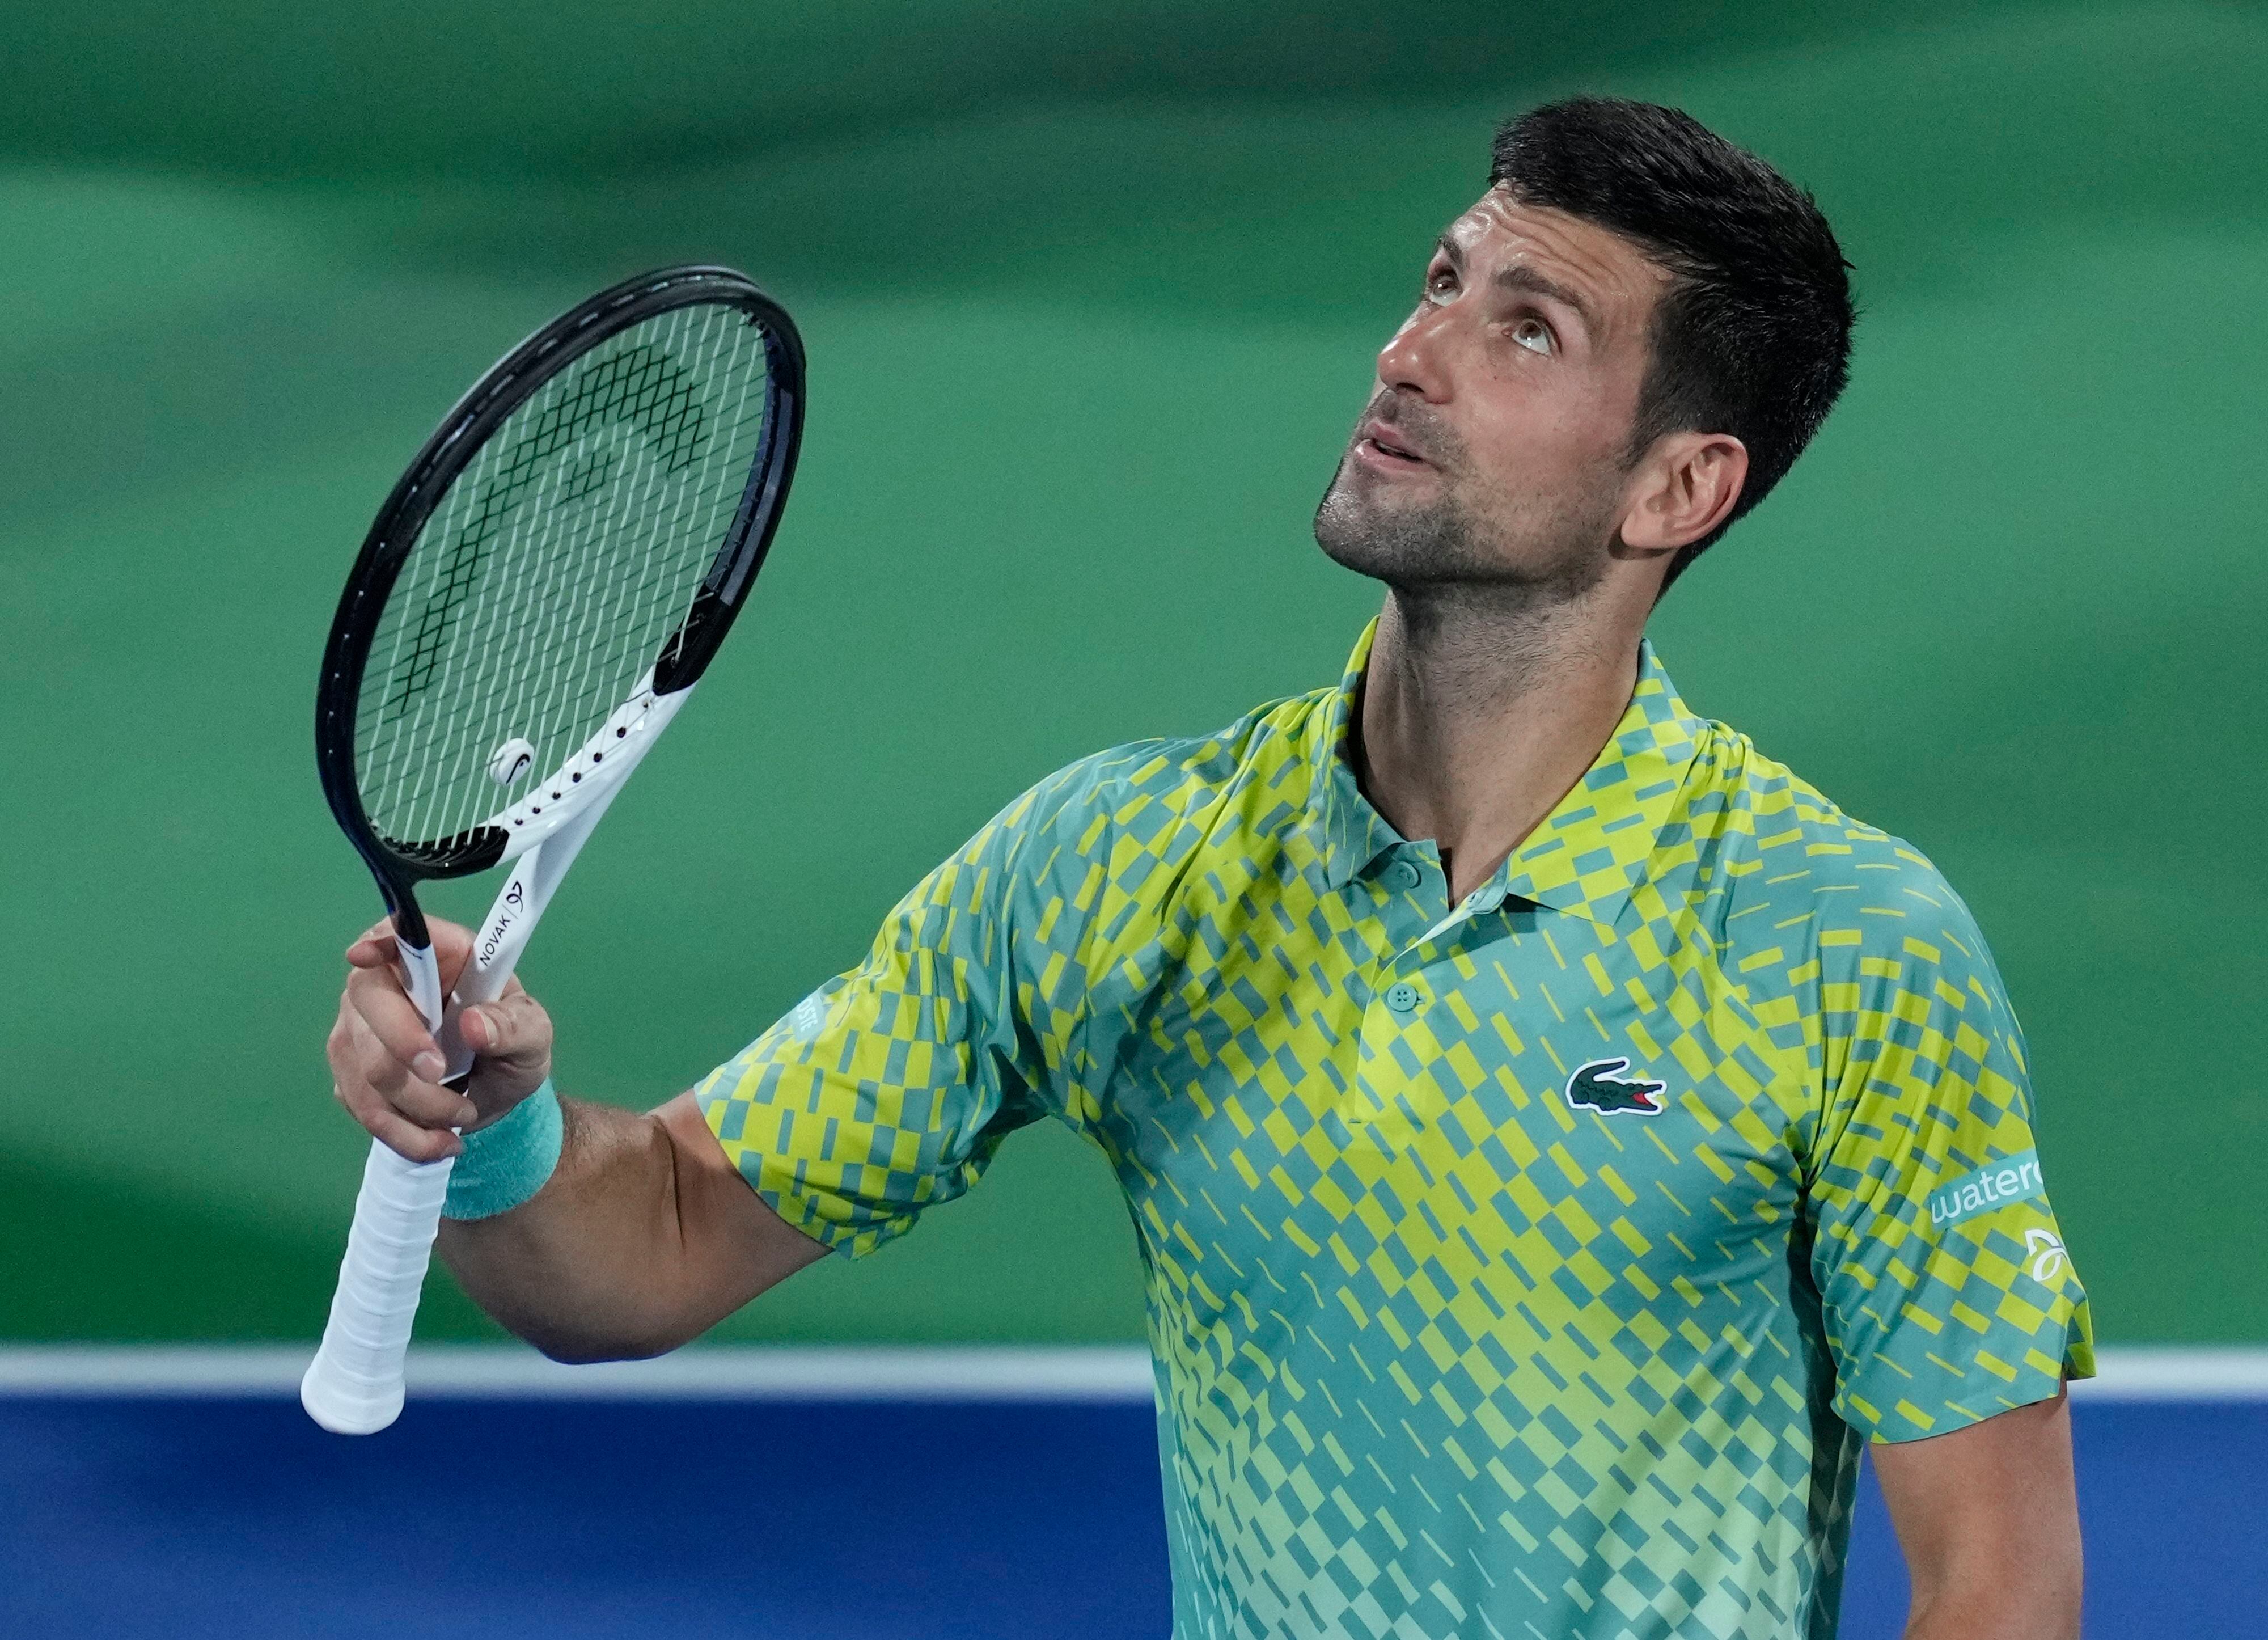 Dubai Tennis Champs: Djokovic digs deep in opening round win